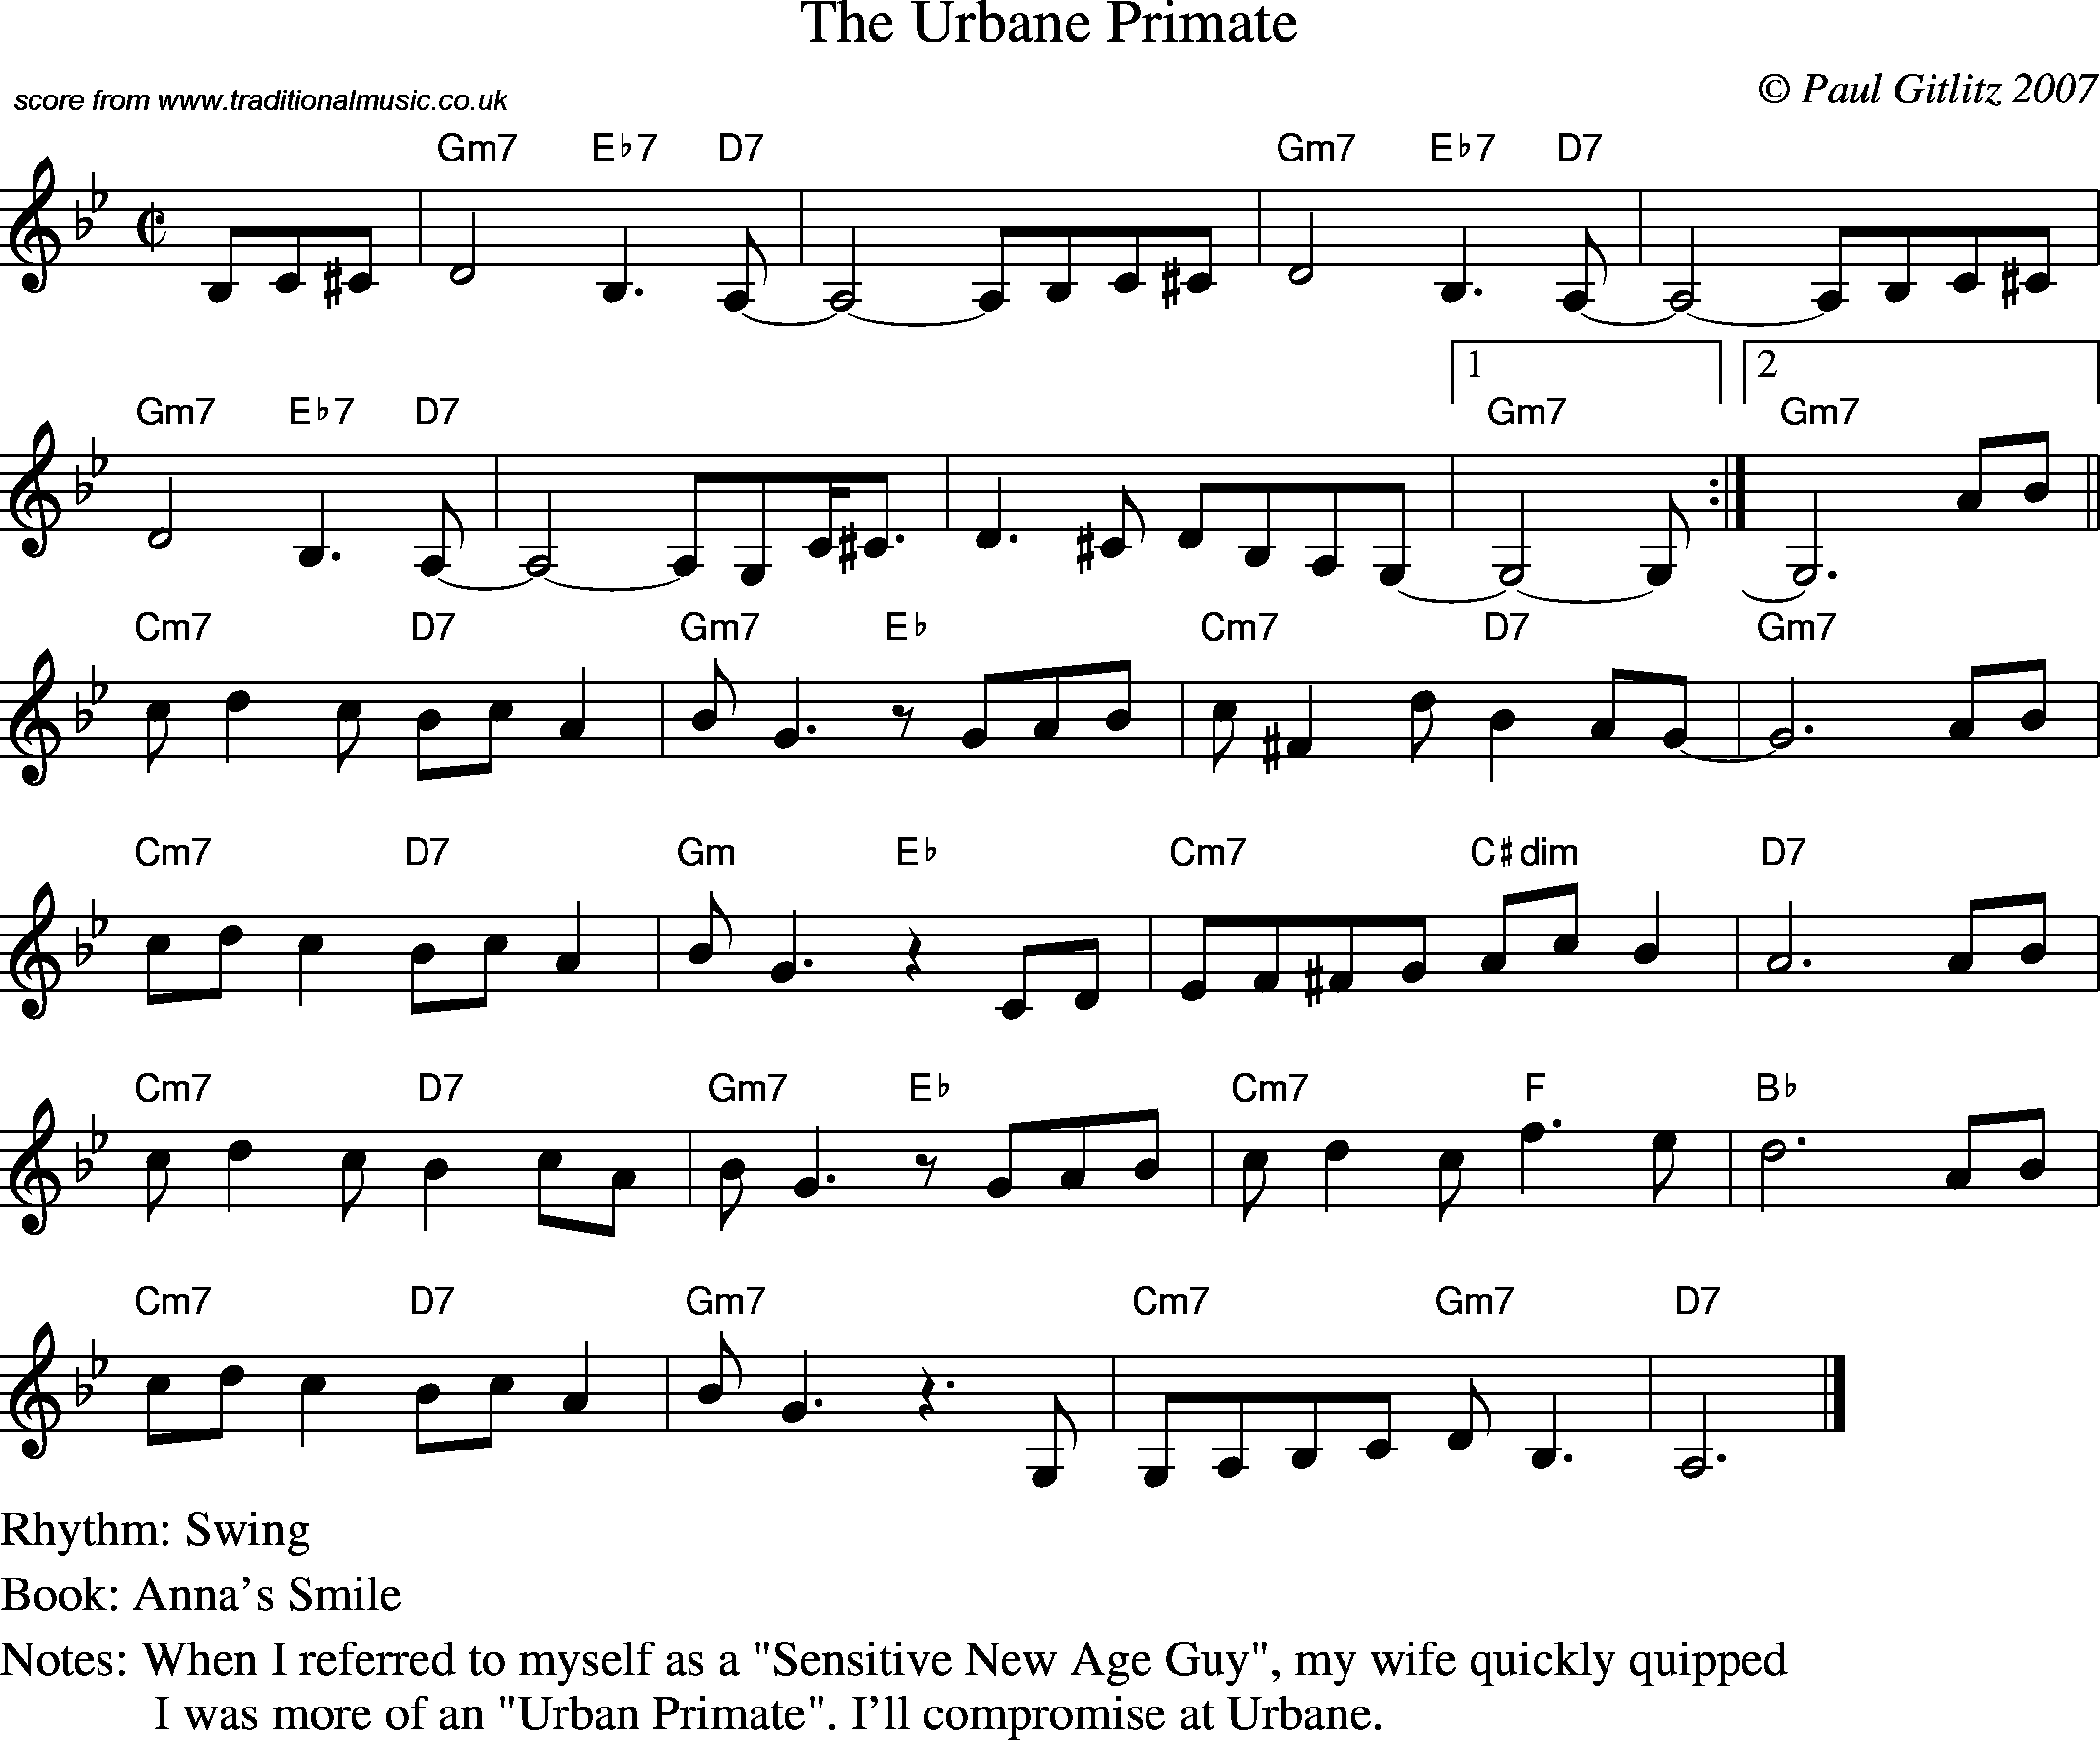 Sheet Music Score for Swing - The Urbane Primate